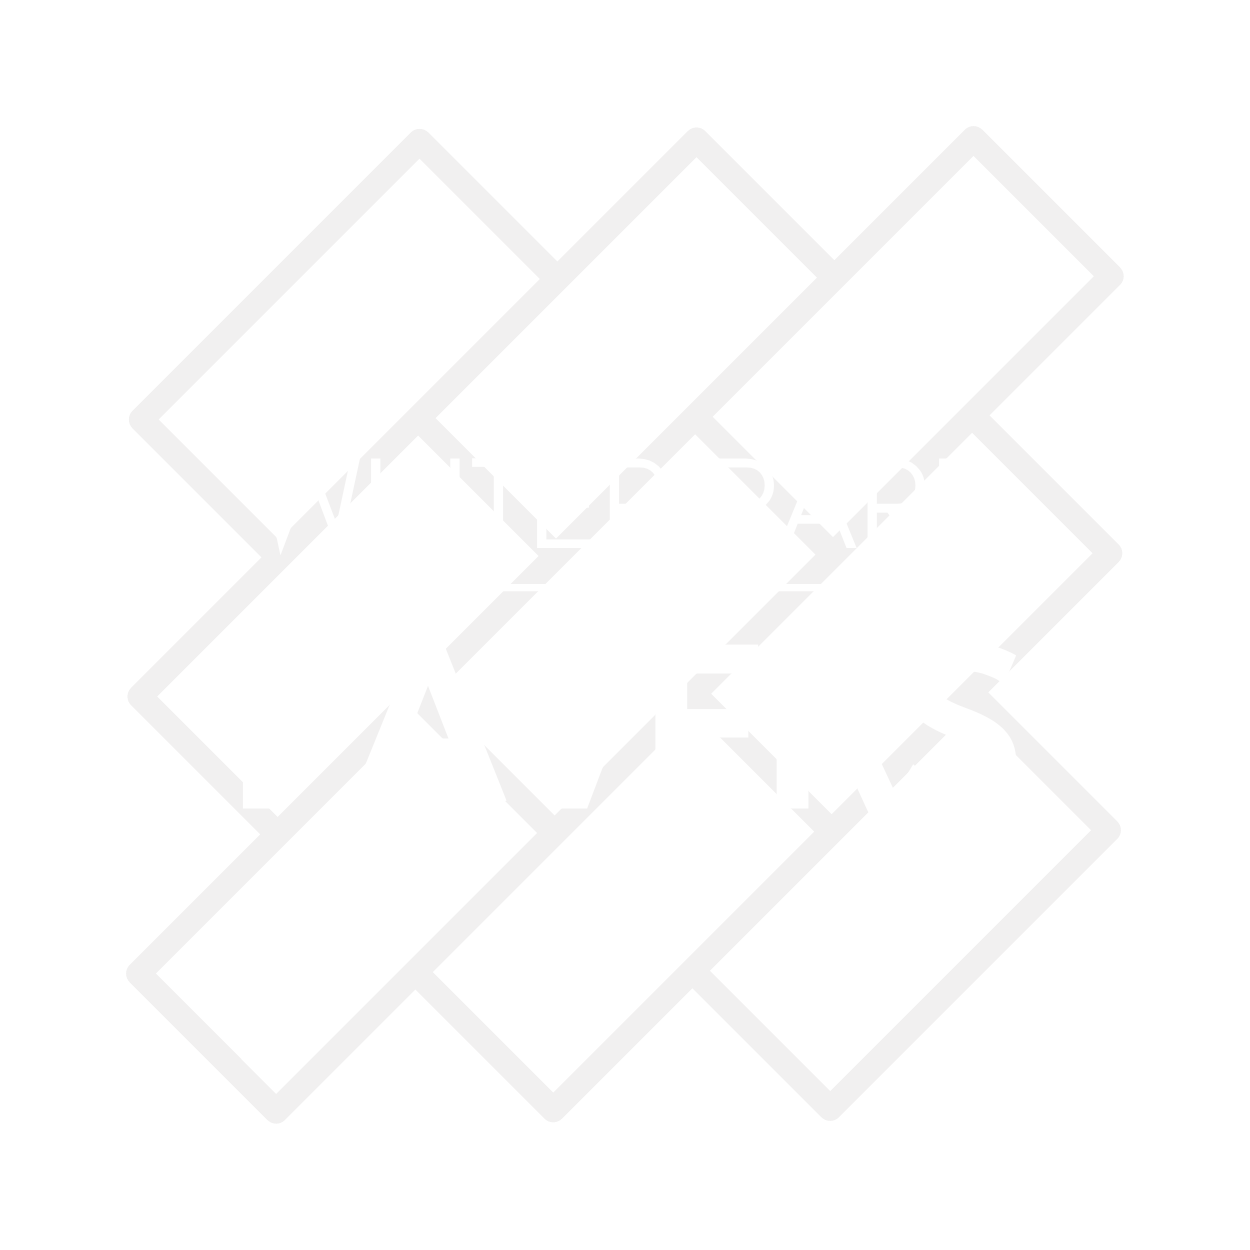 Winter Park Pavers Logo